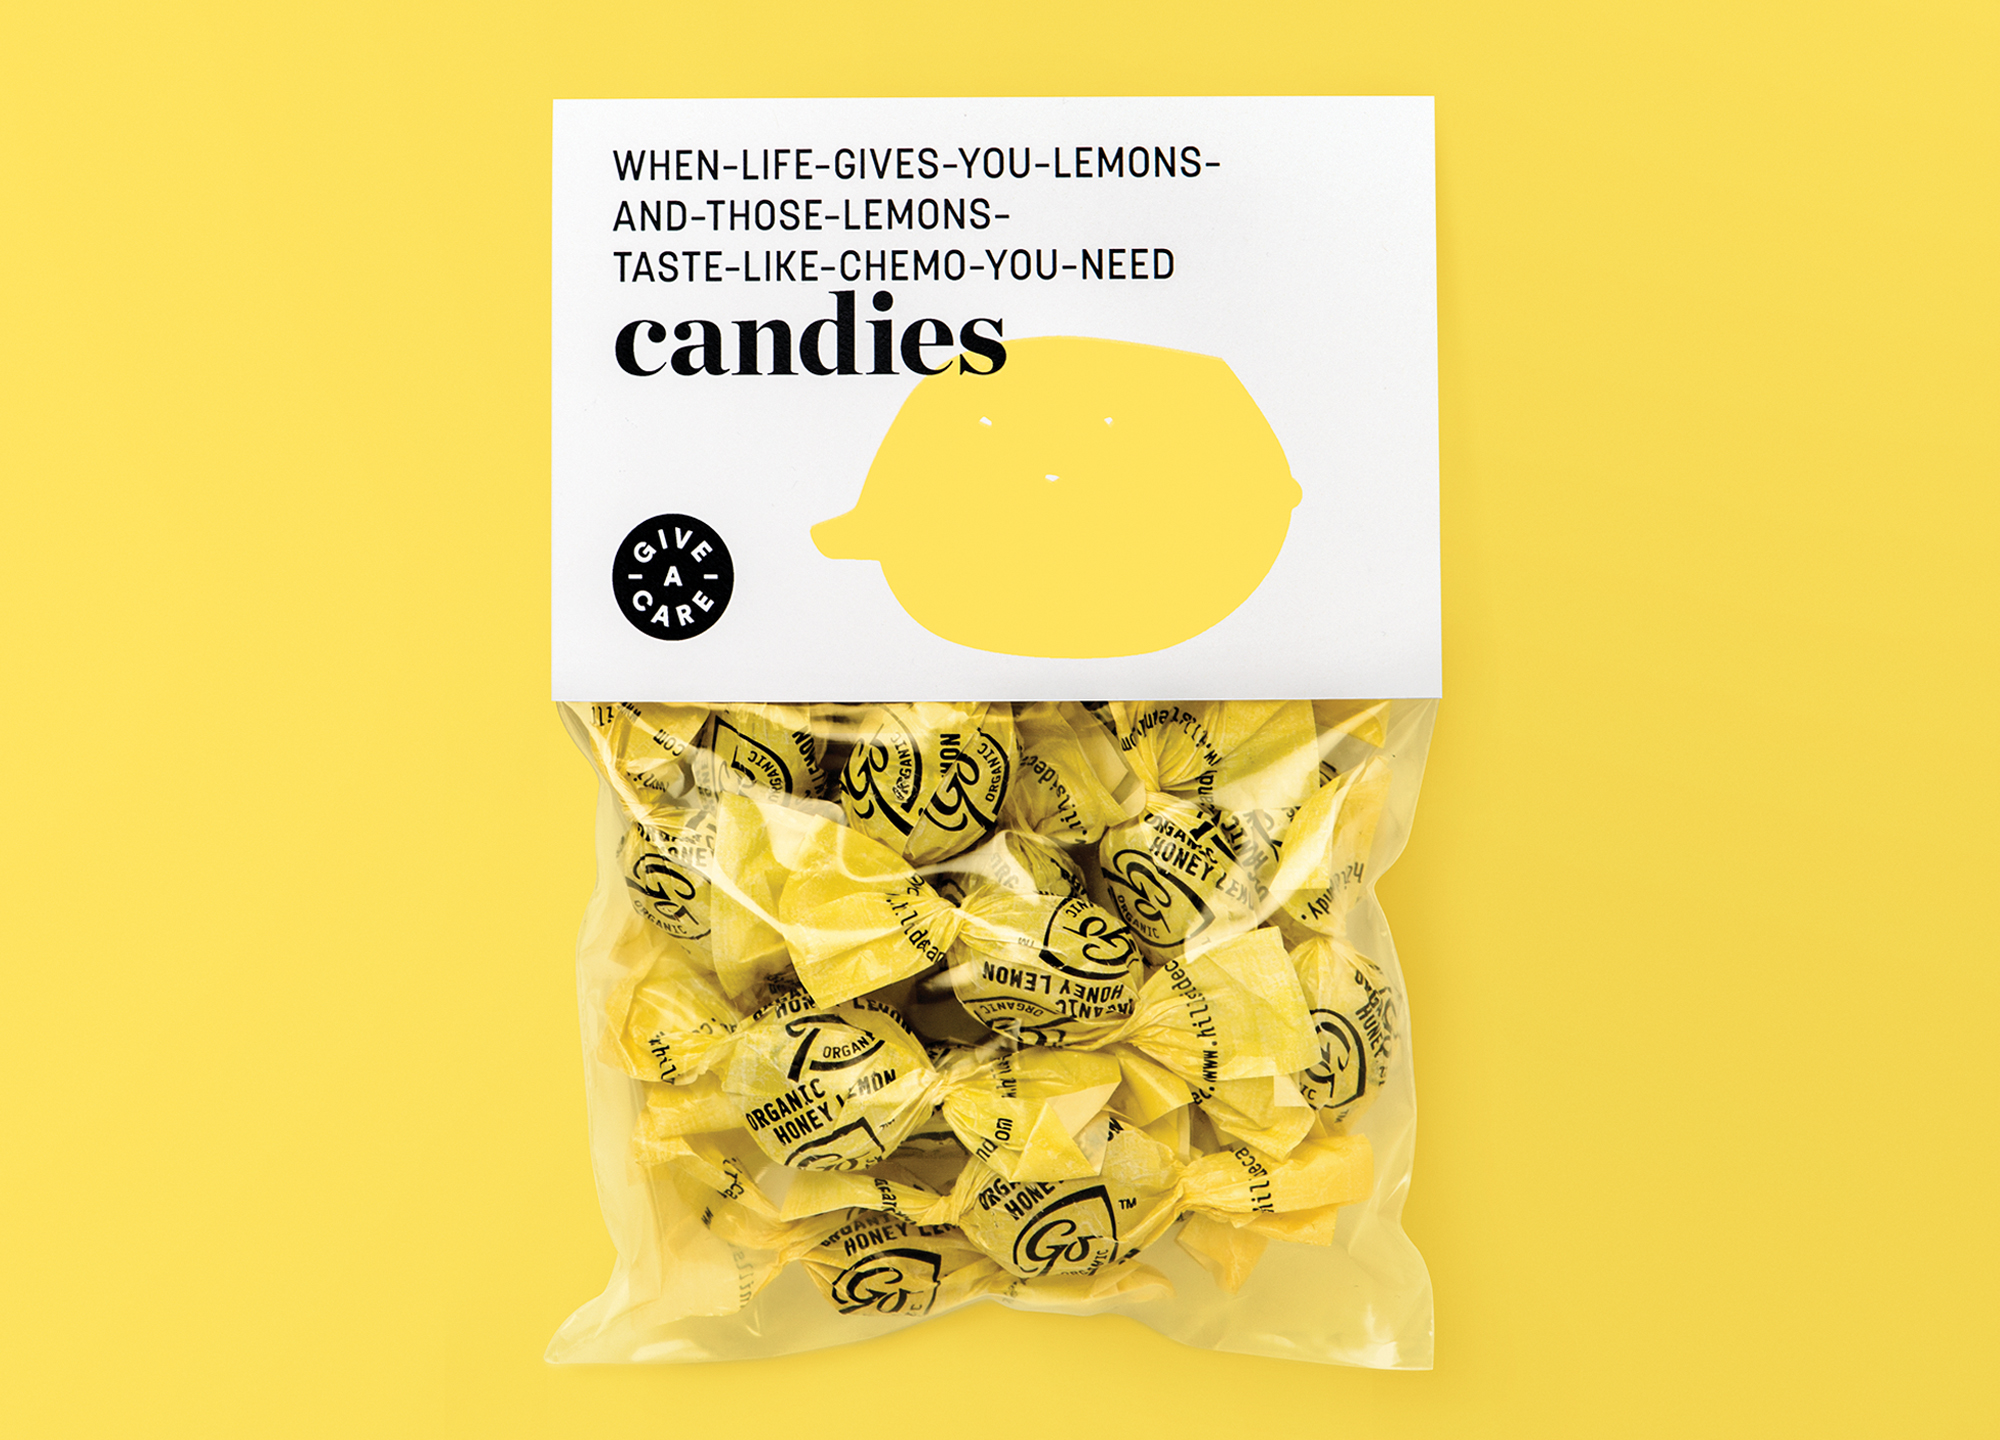 give_a_care_lemon_candies.jpg